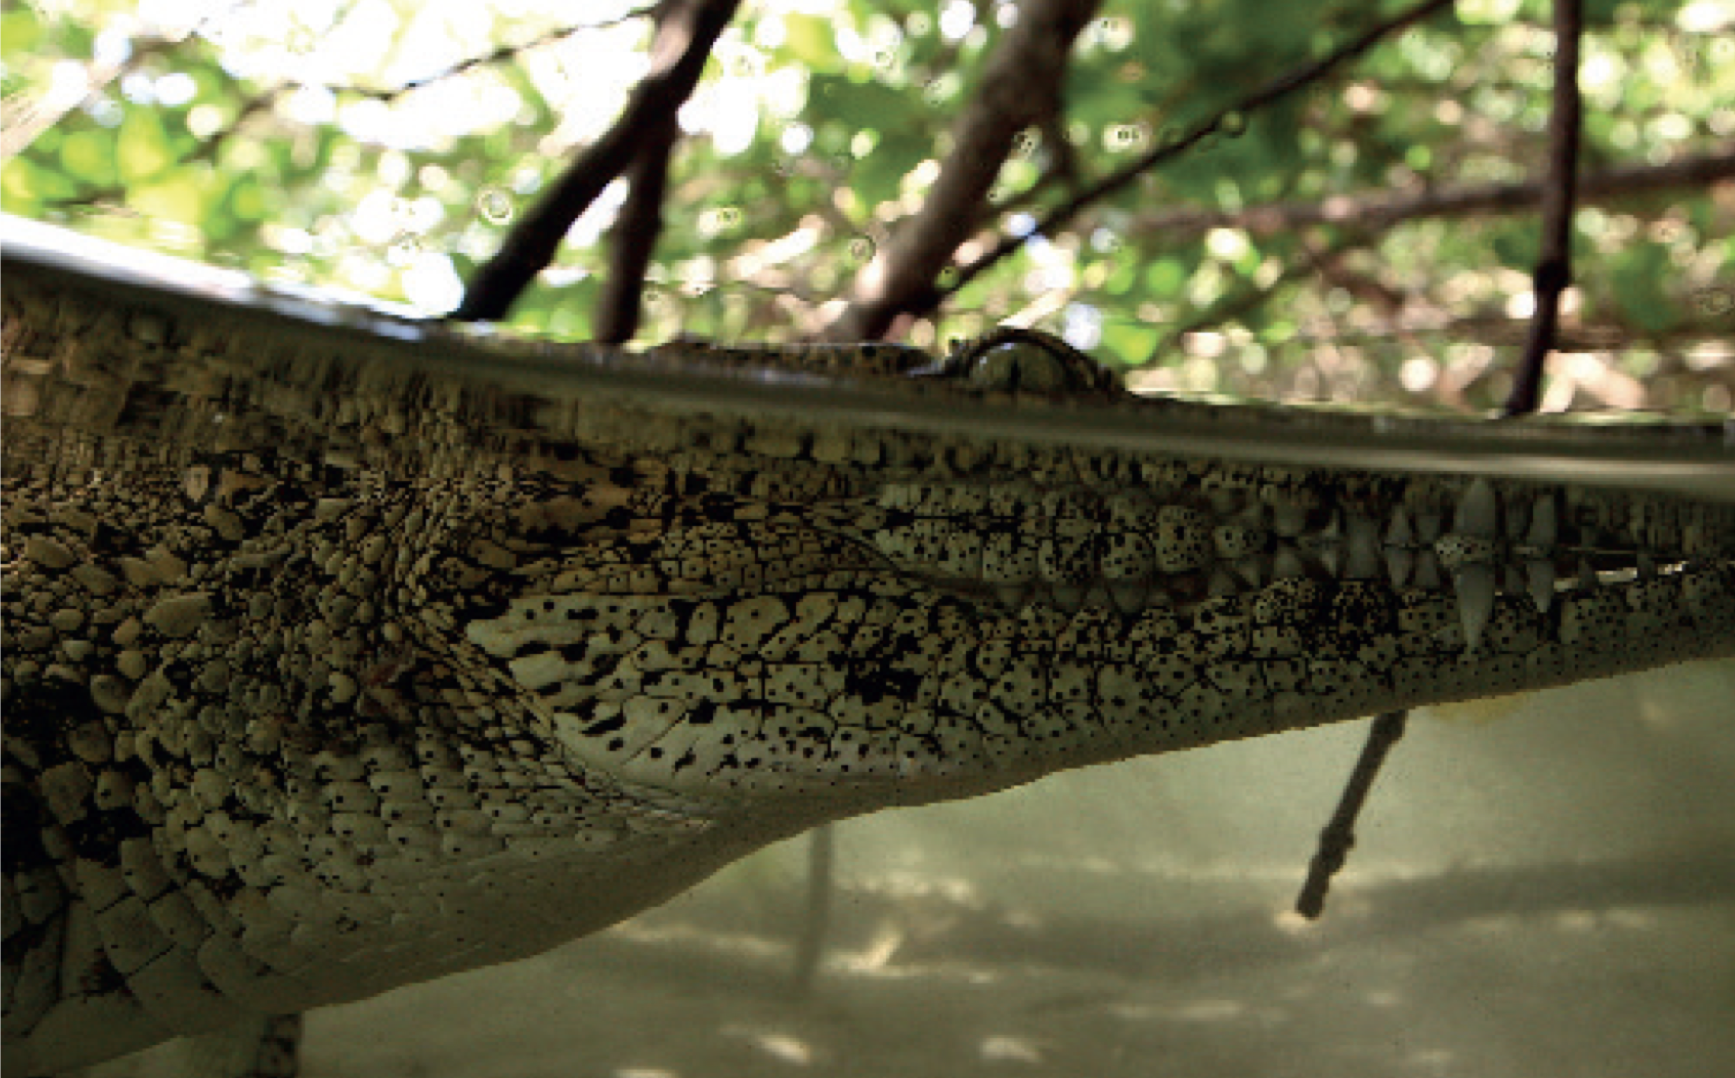 A crocodile underwater.